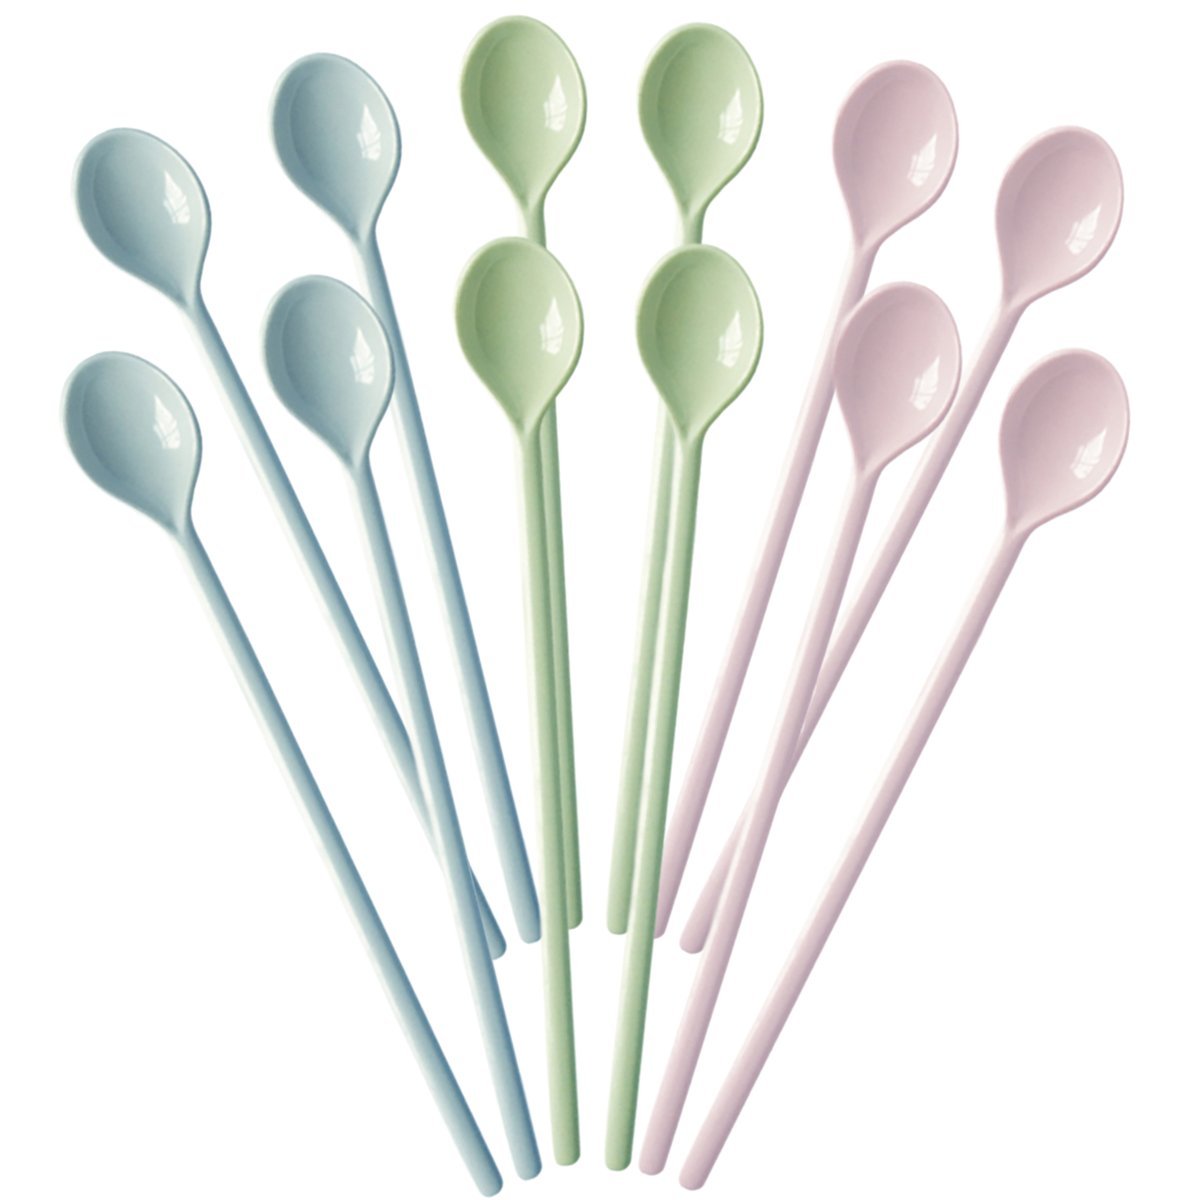 Long handled sundae spoons